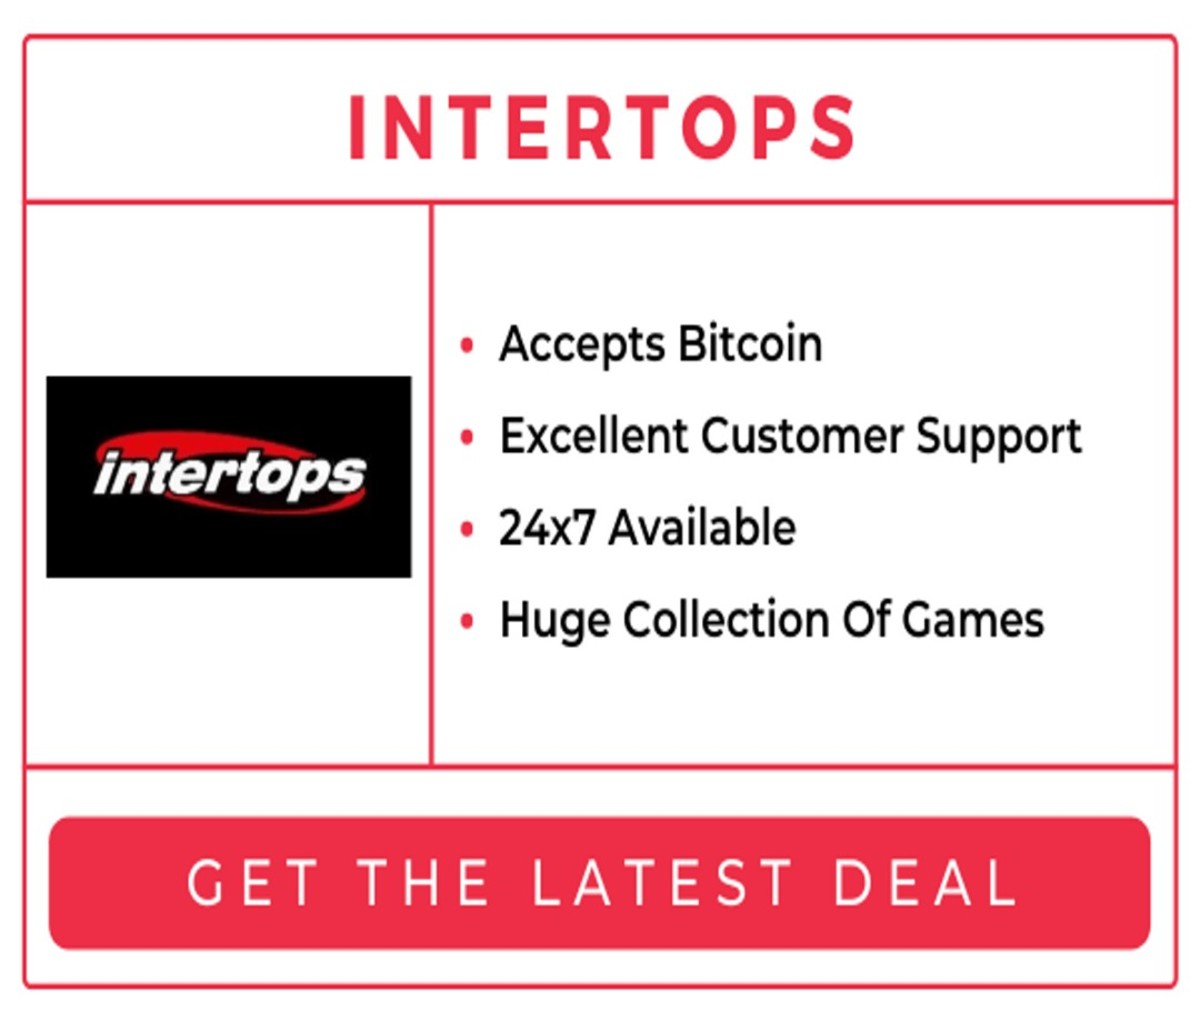 Intertops - User Friendly Gambling Website